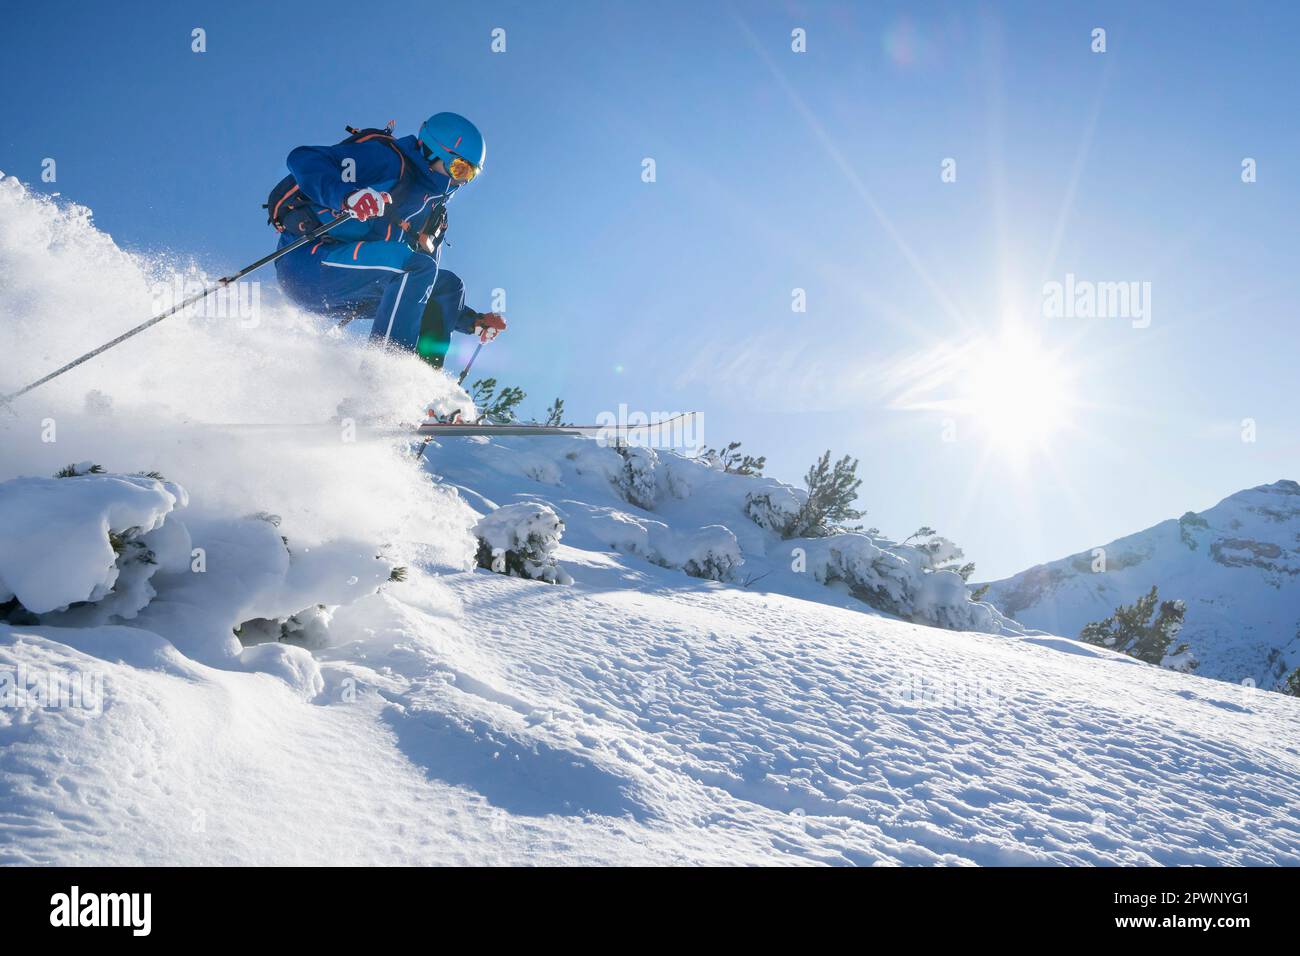 Skier jumping on snow Stock Photo